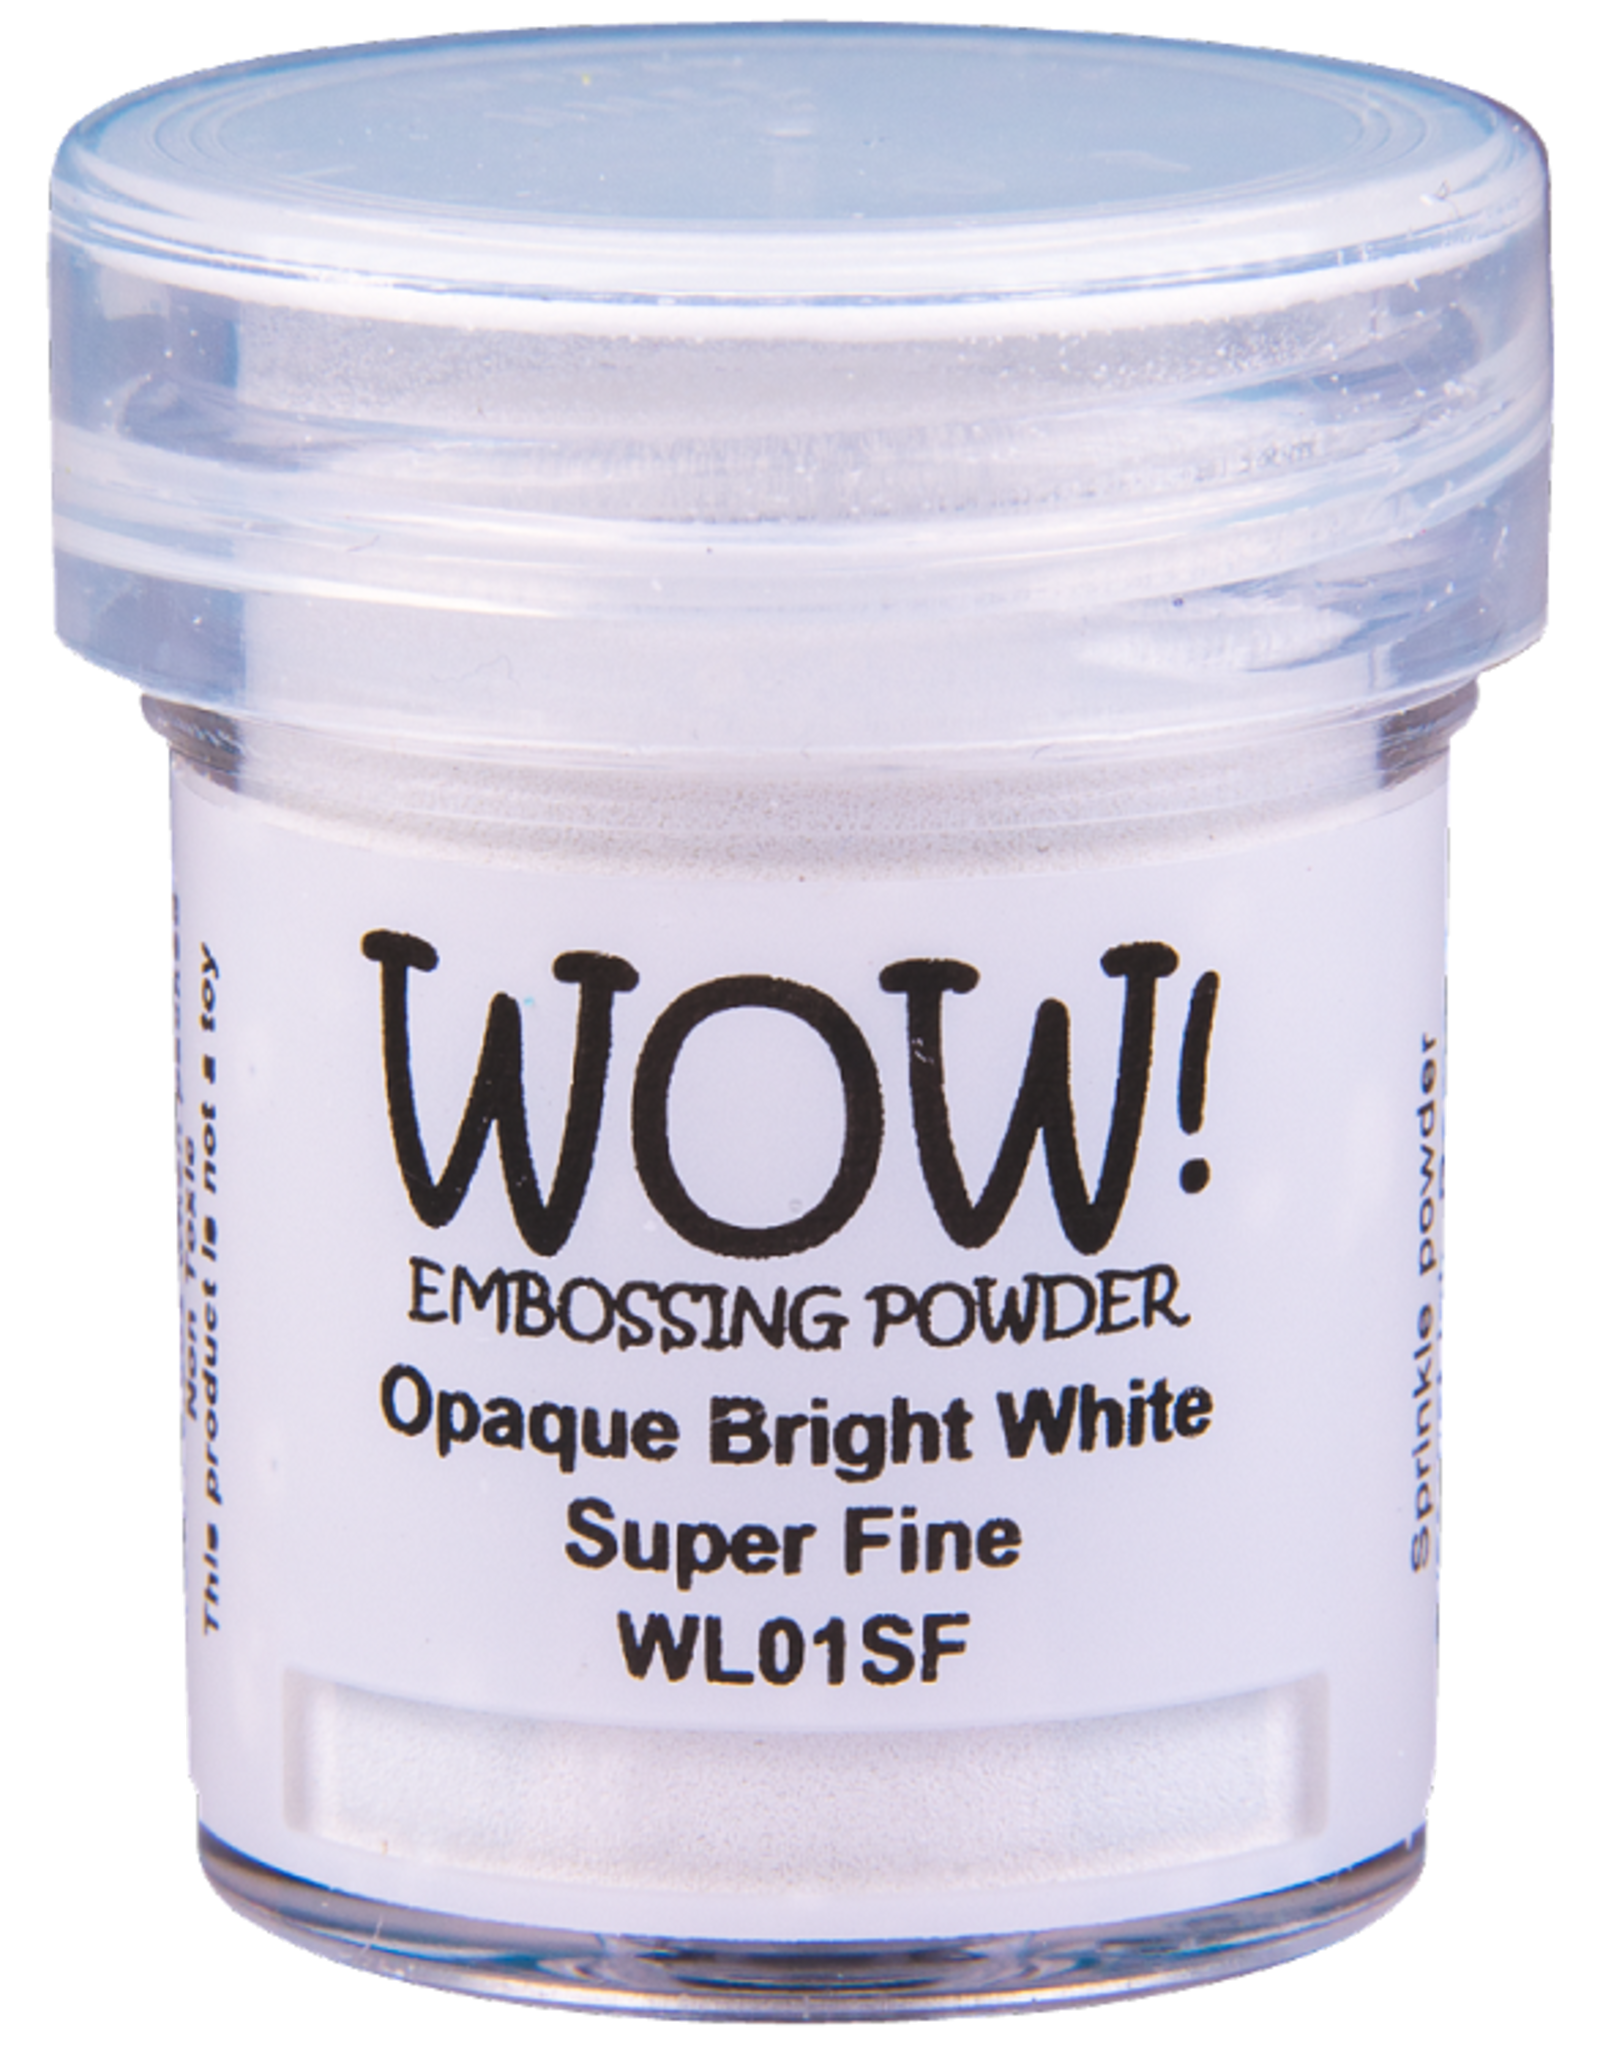 WOW! WOW OPAQUE BRIGHT WHITE SUPER FINE EMBOSSING POWDER 0.5OZ